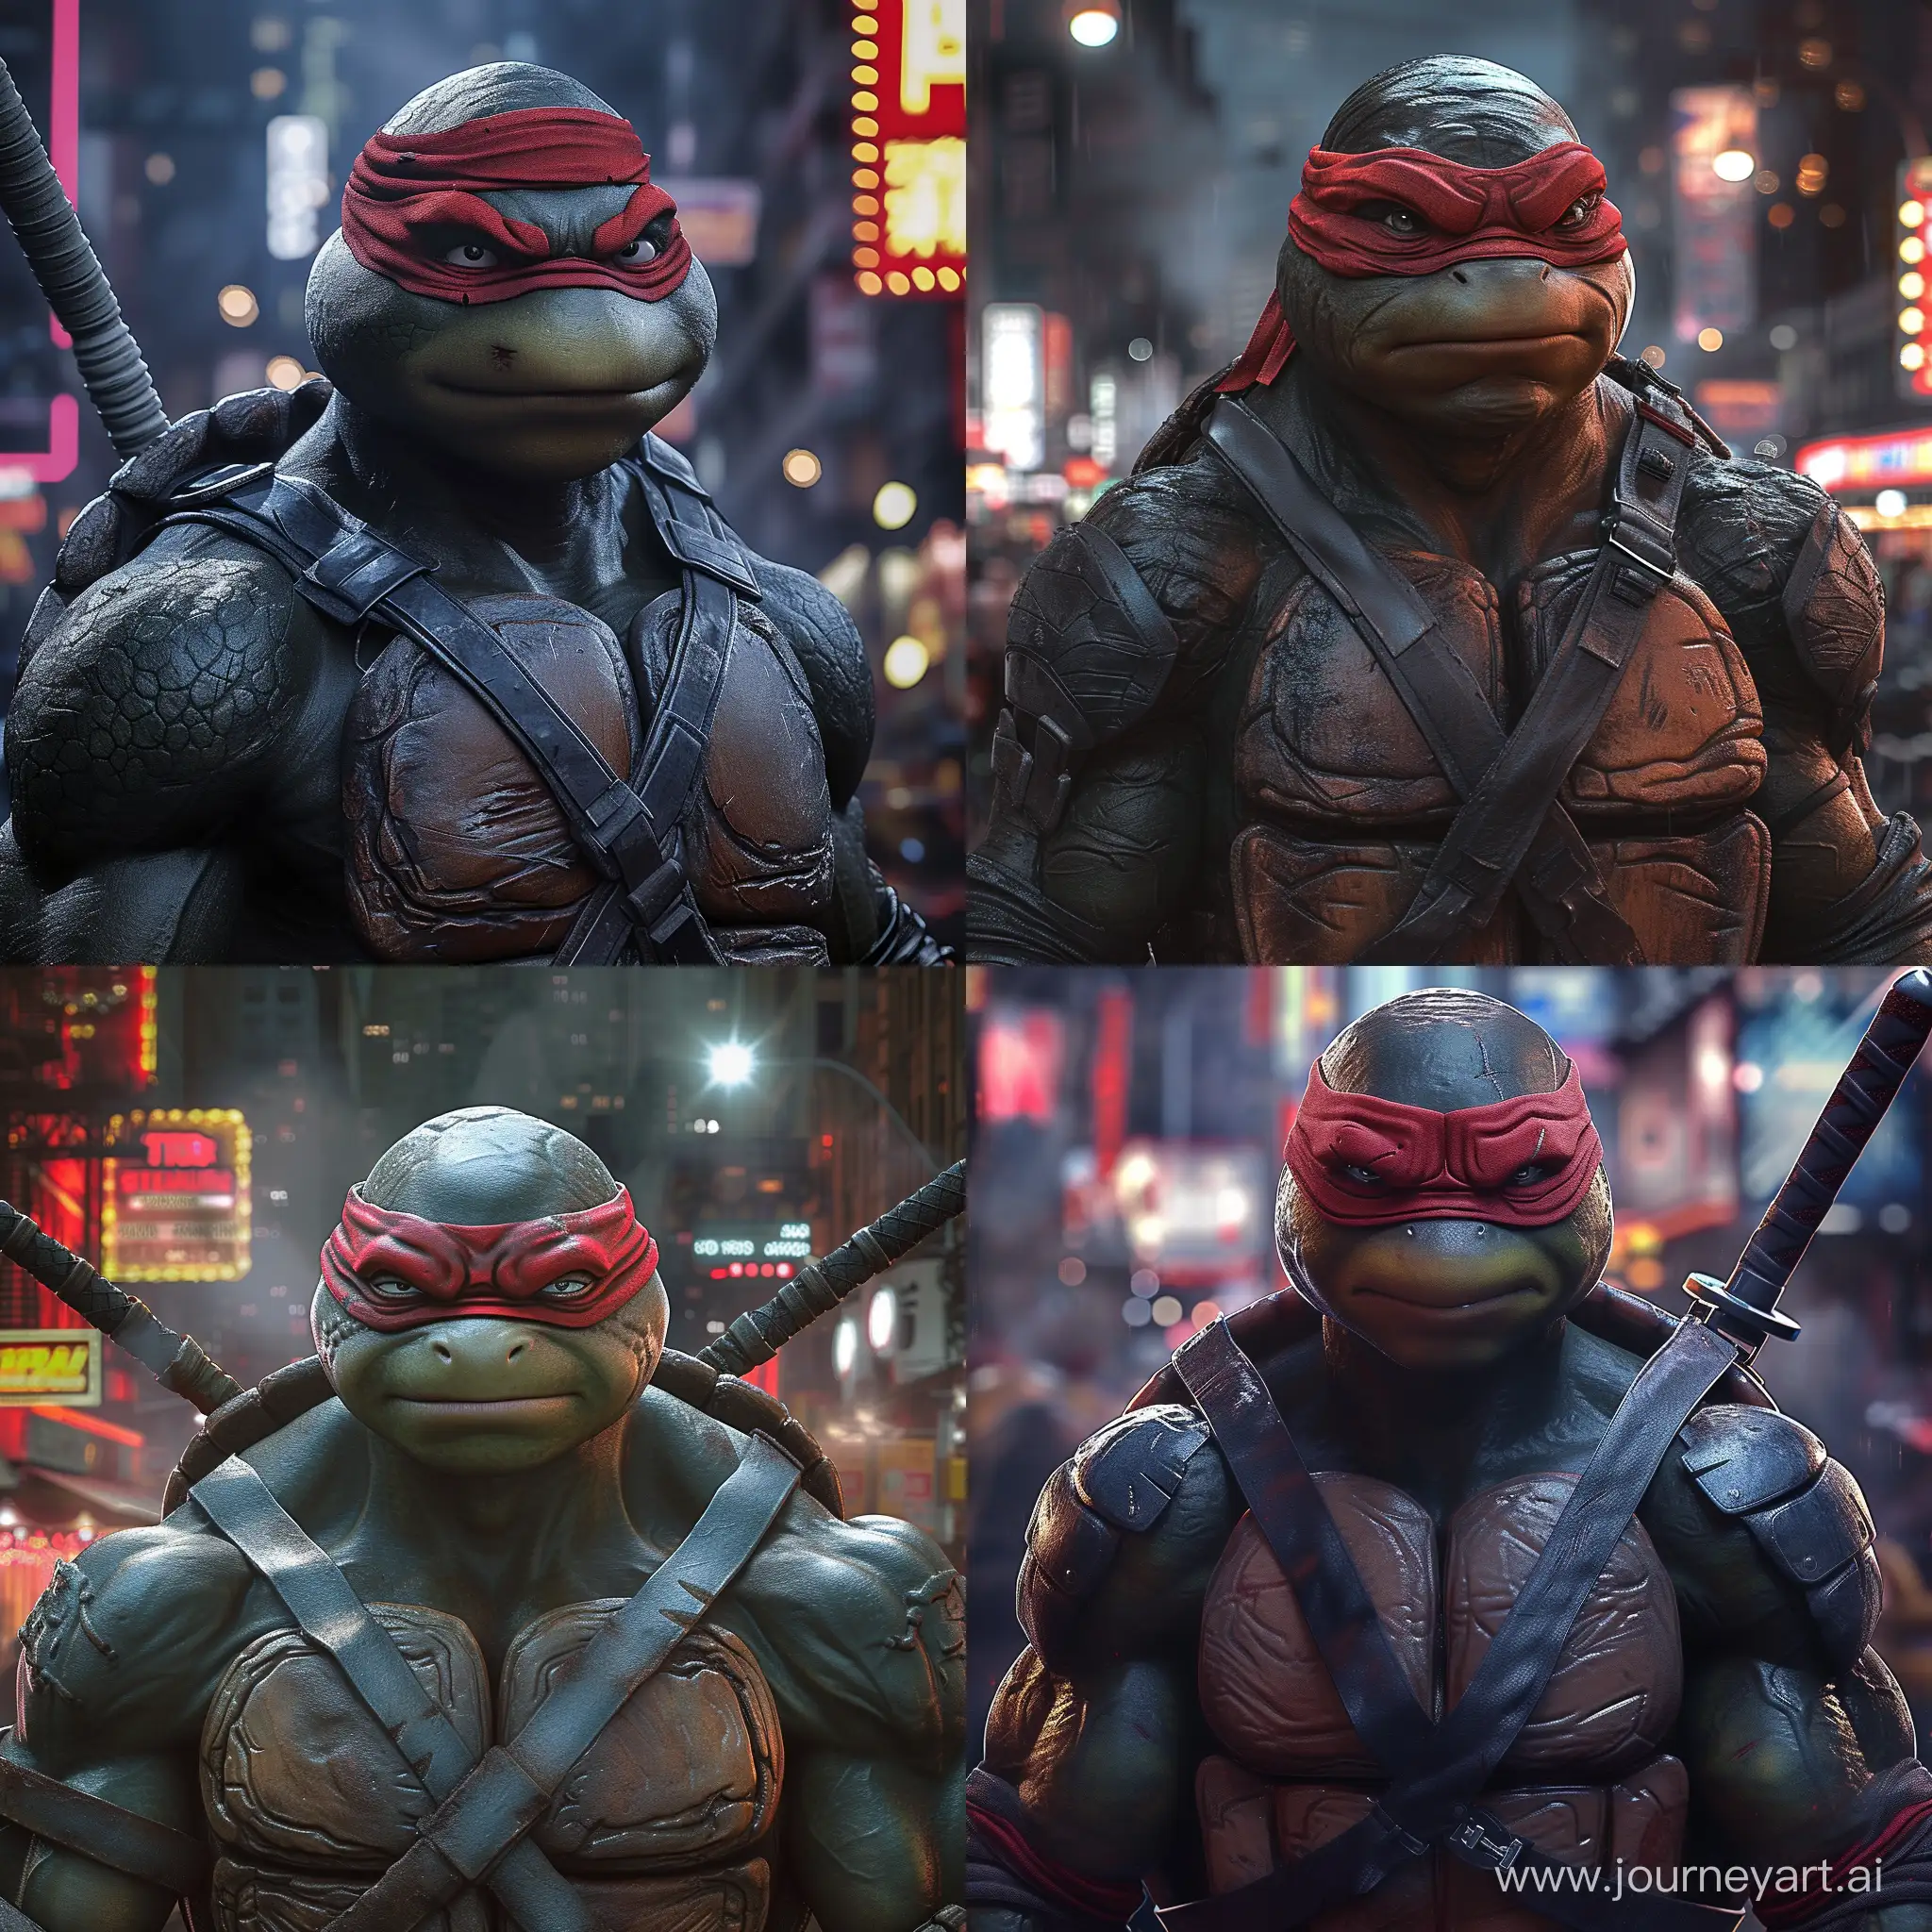 Confident-Raphael-from-Teenage-Mutant-Ninja-Turtles-in-Urban-Night-Scene